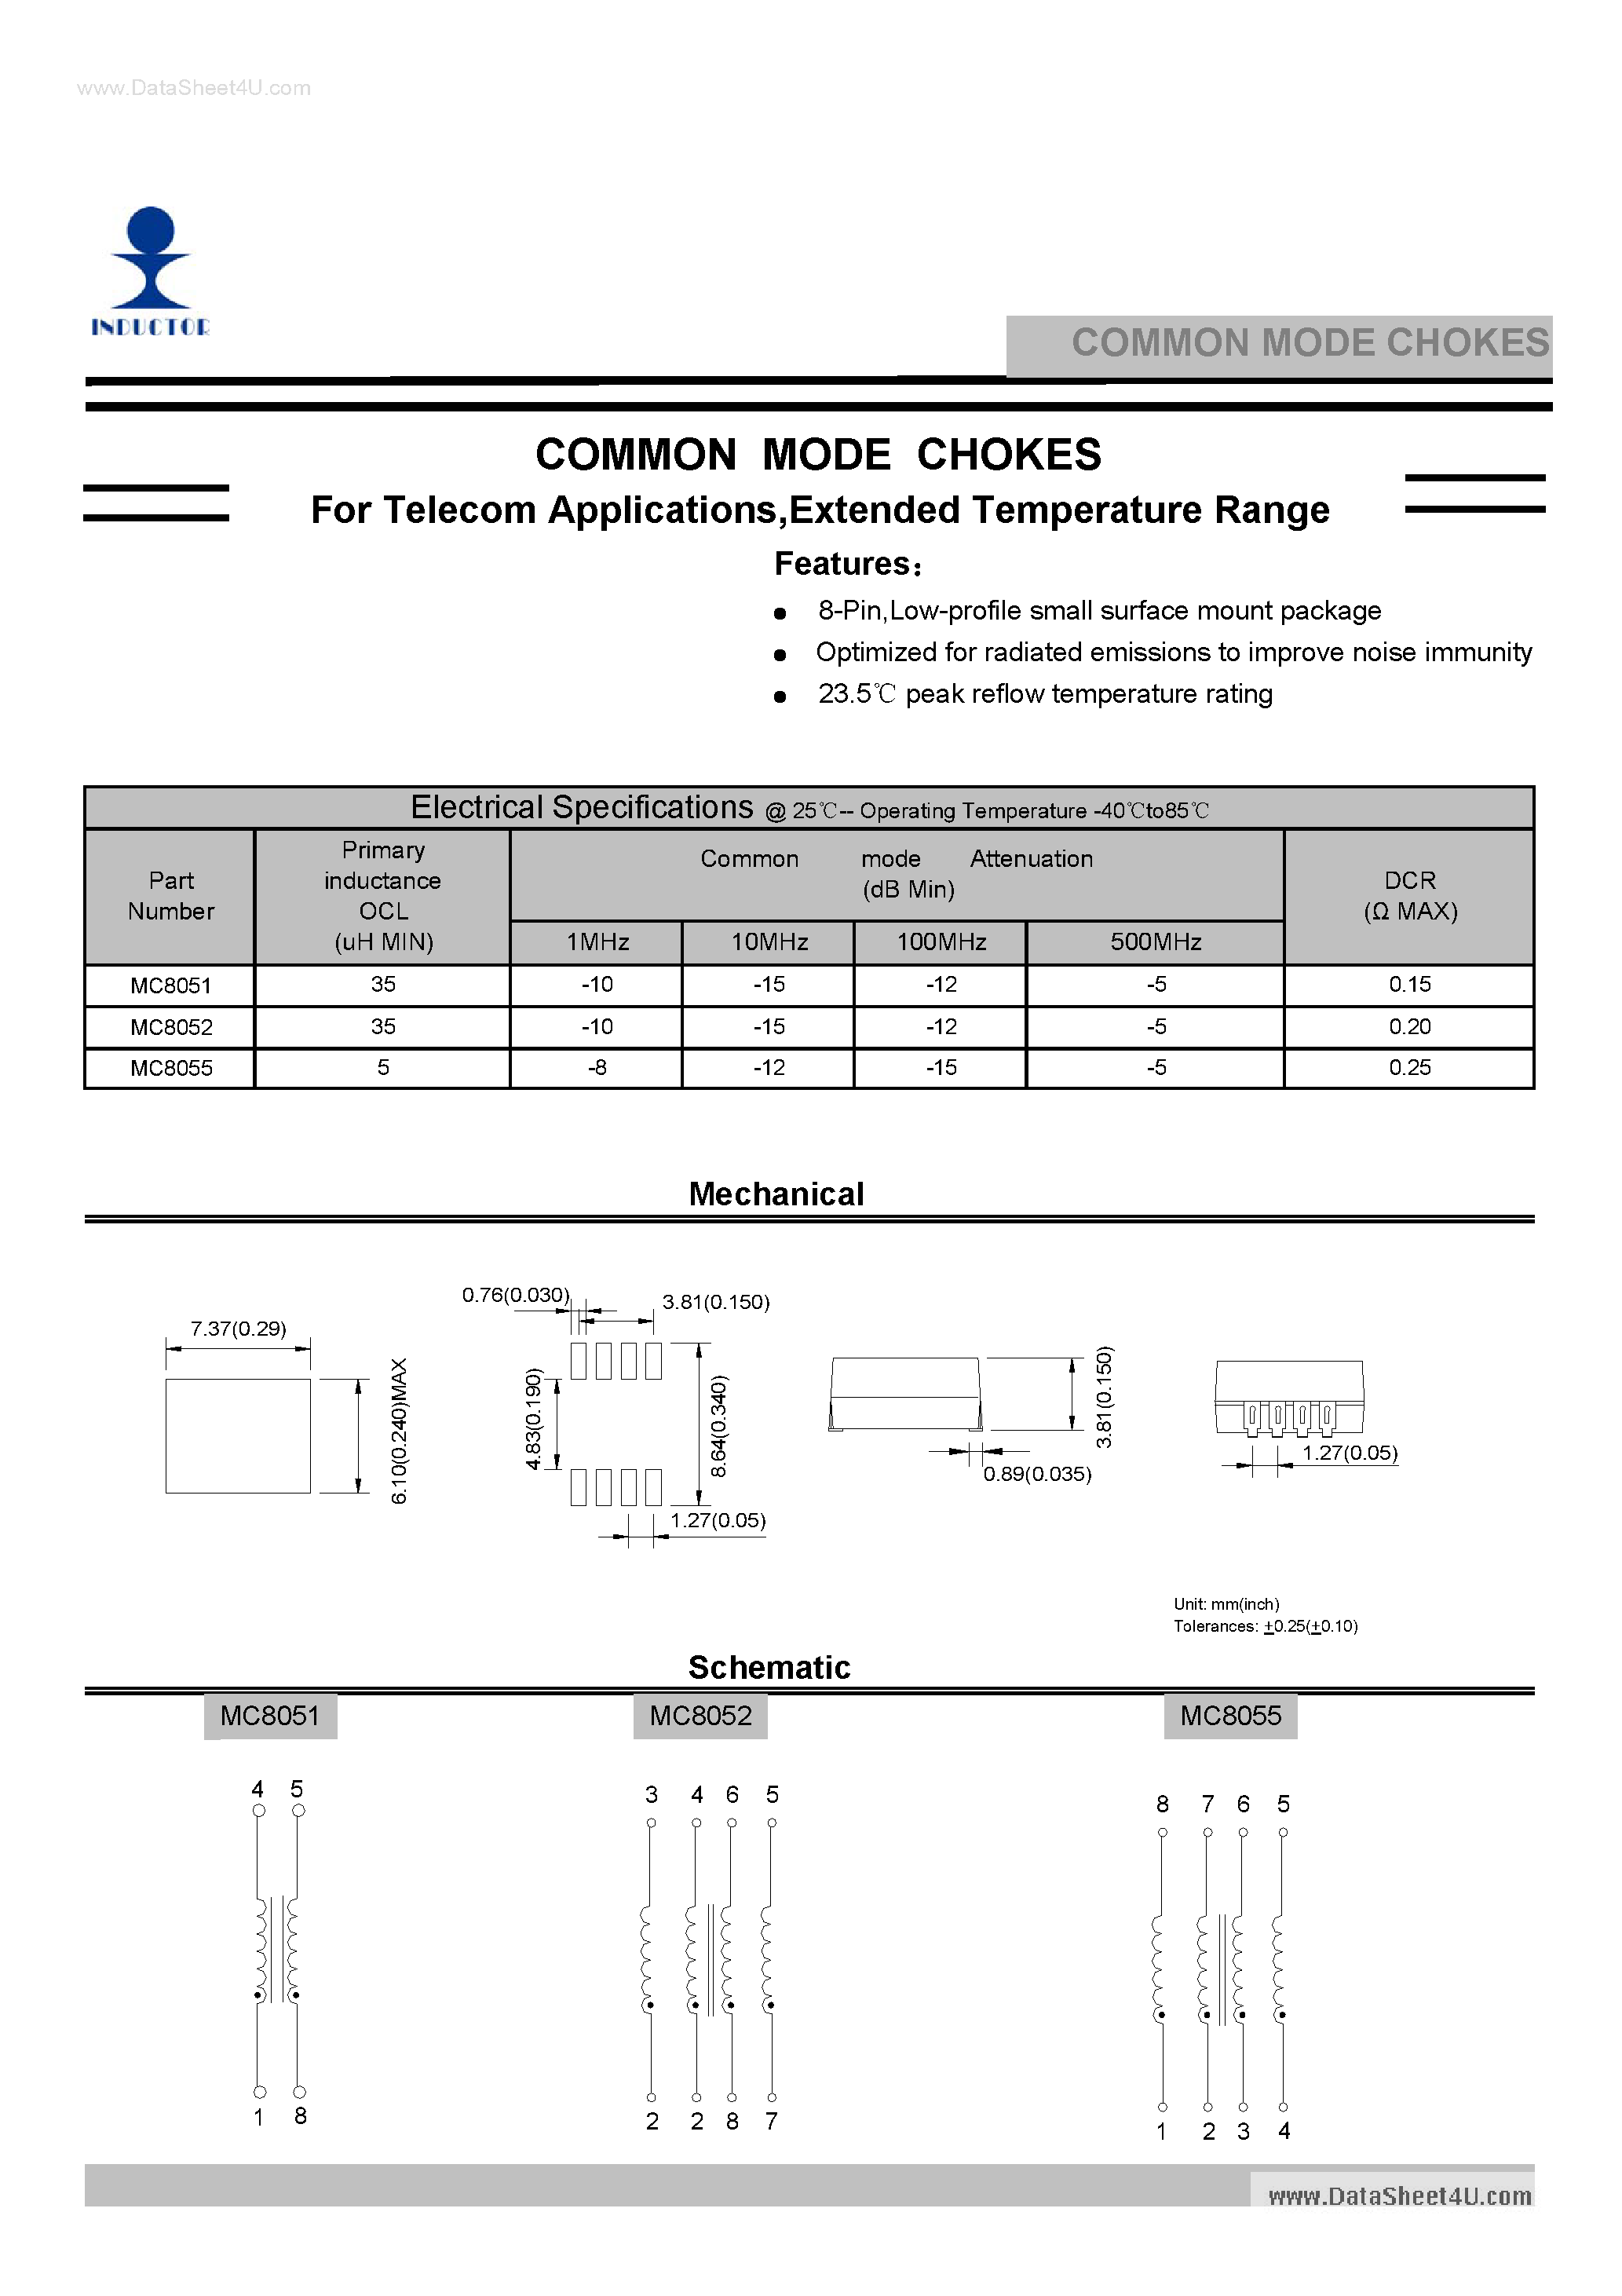 Datasheet MC8051 - (MC8051 - MC8055) Common Mode Chokes page 1